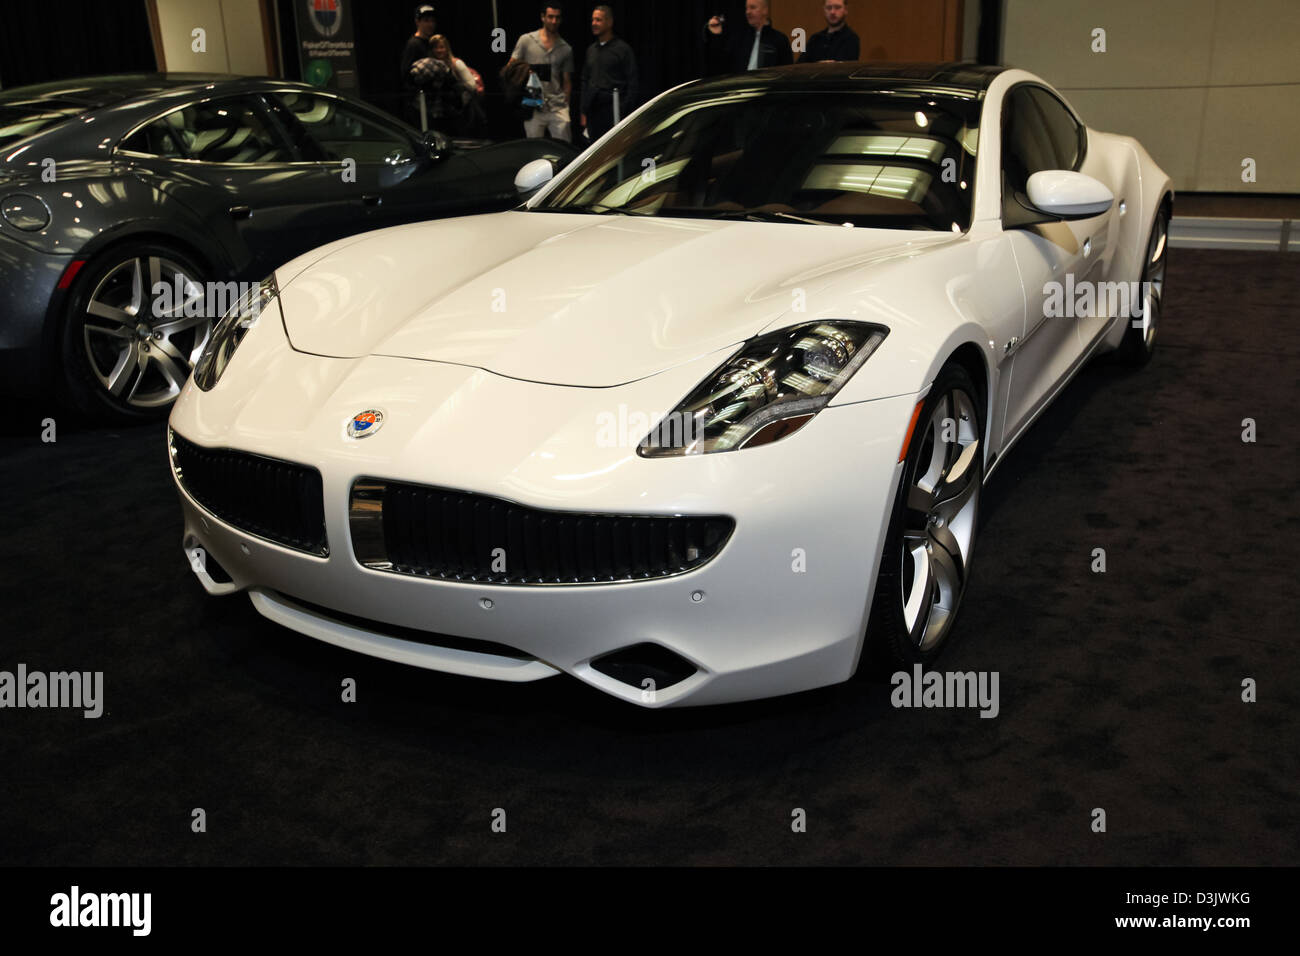 shiny white luxury sports car Stock Photo